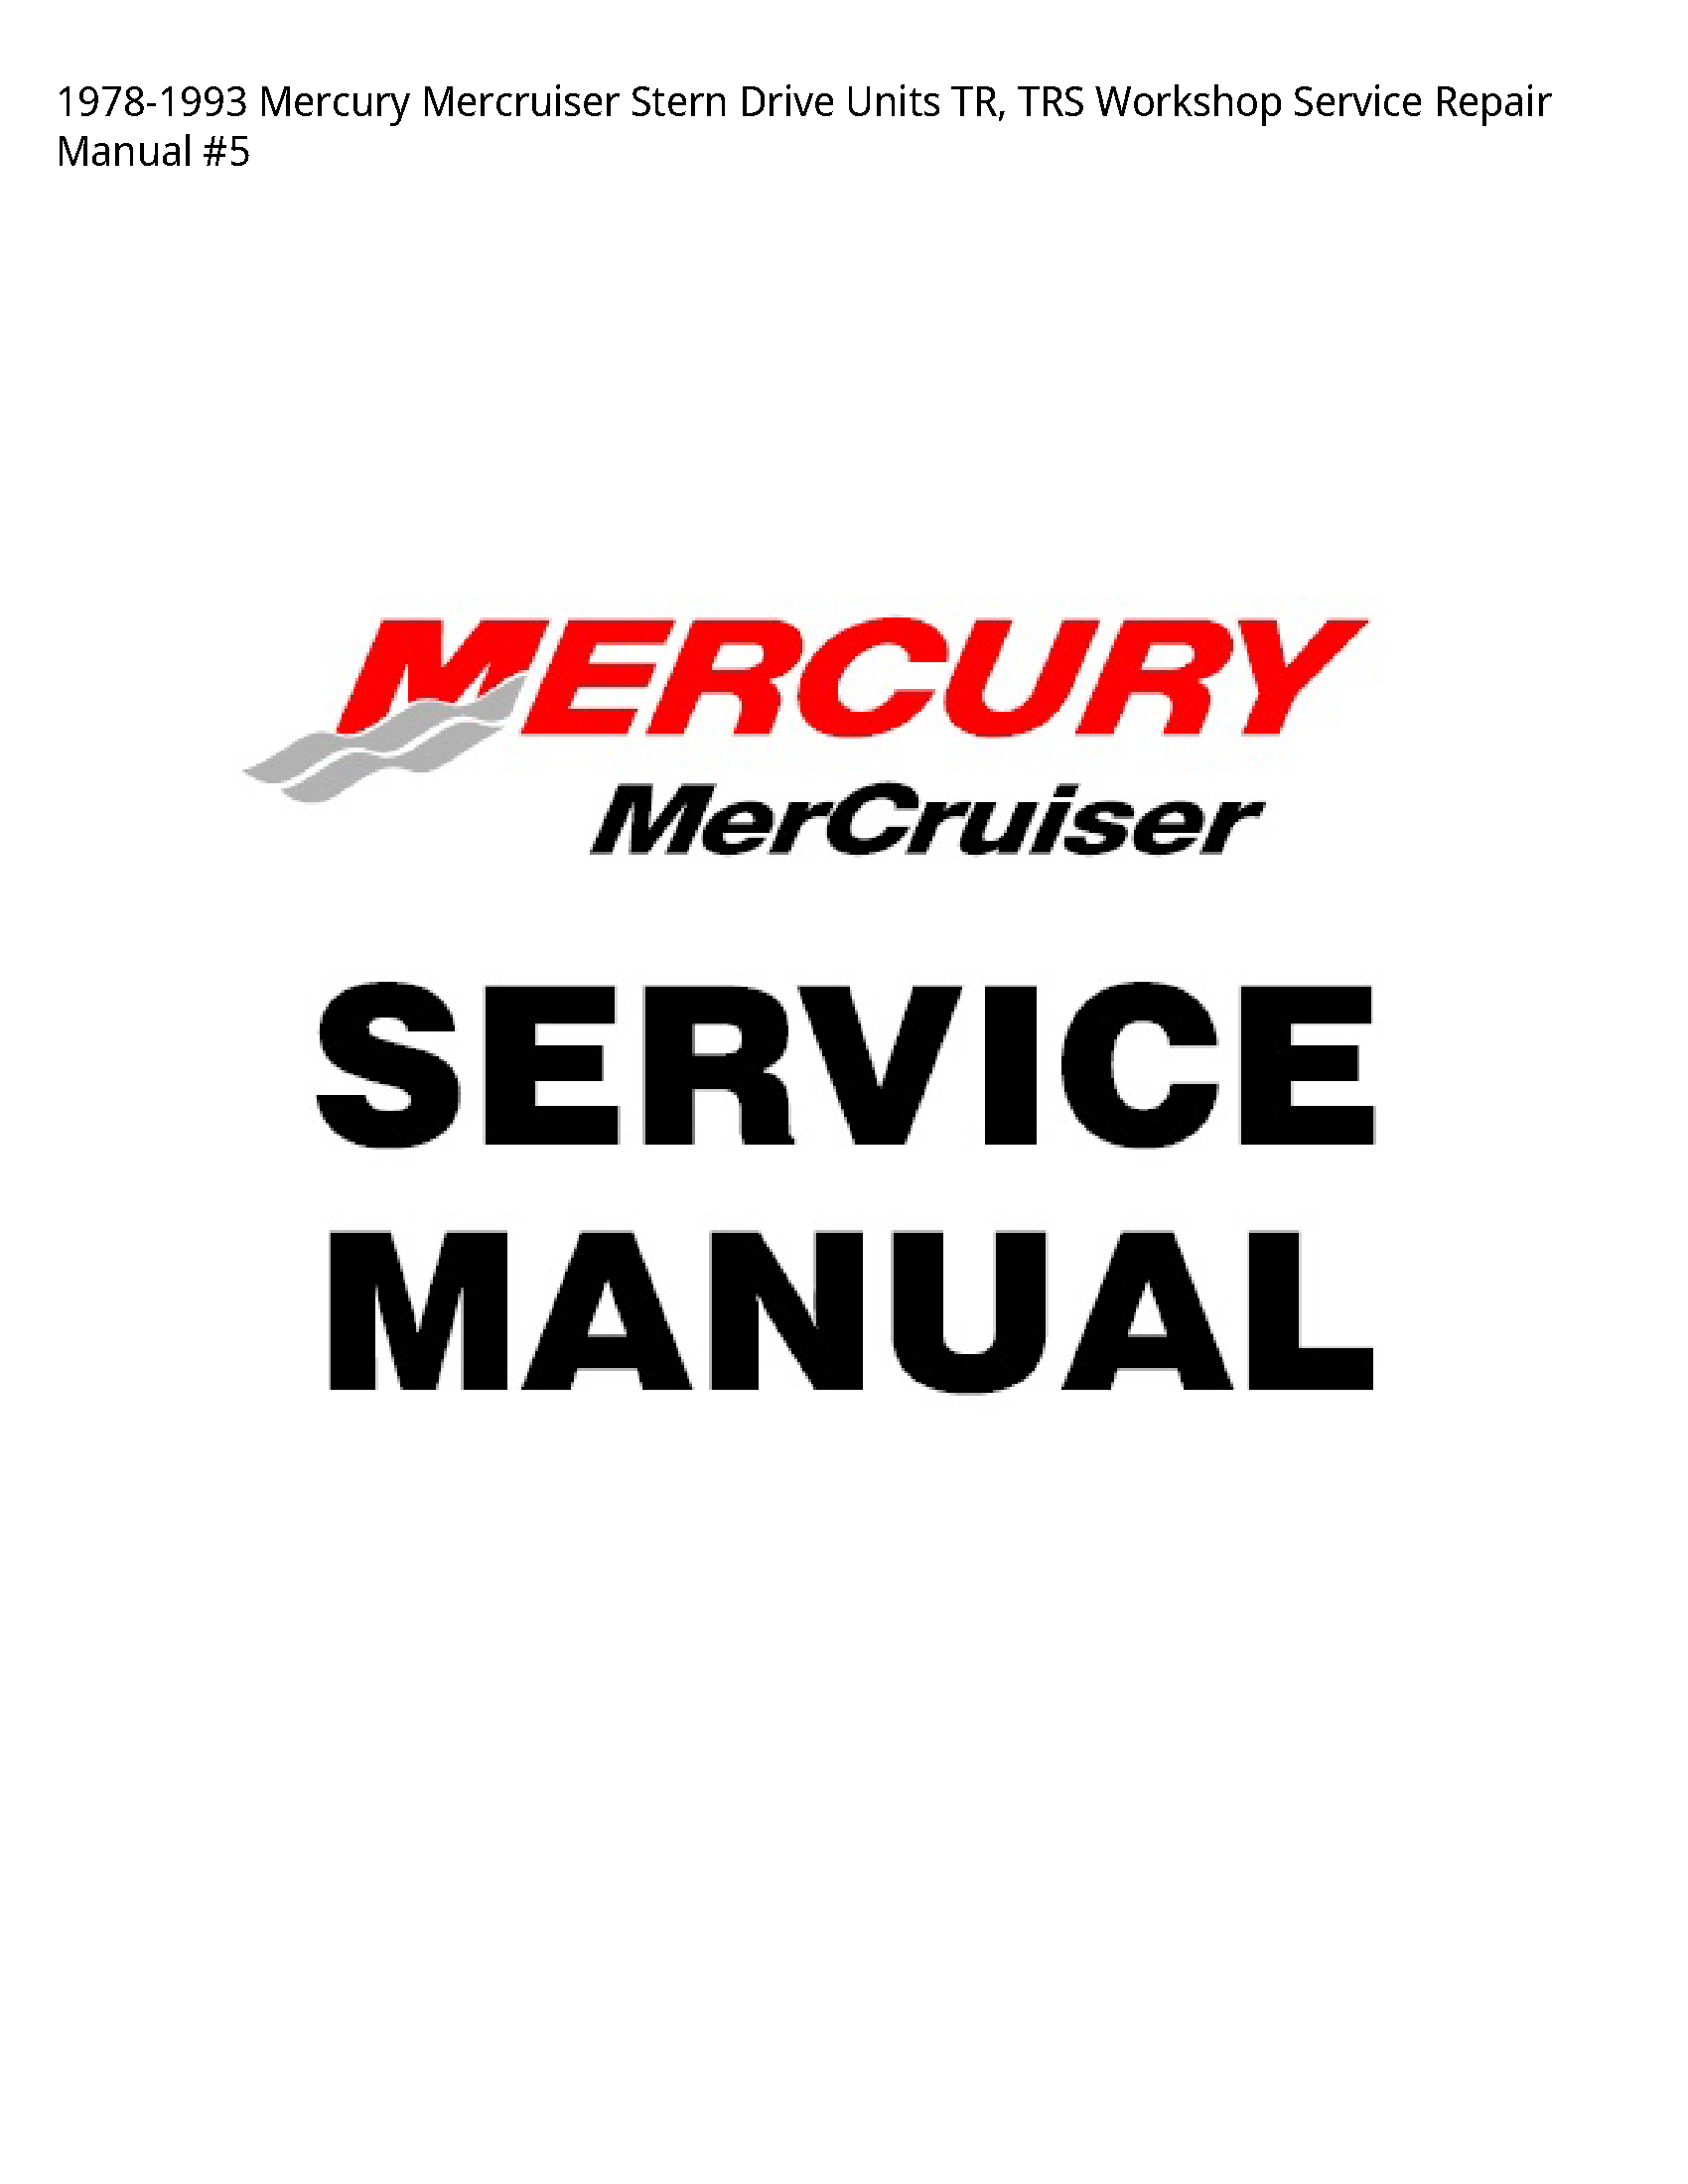 Mercury Mercruiser Stern Drive Units TR manual